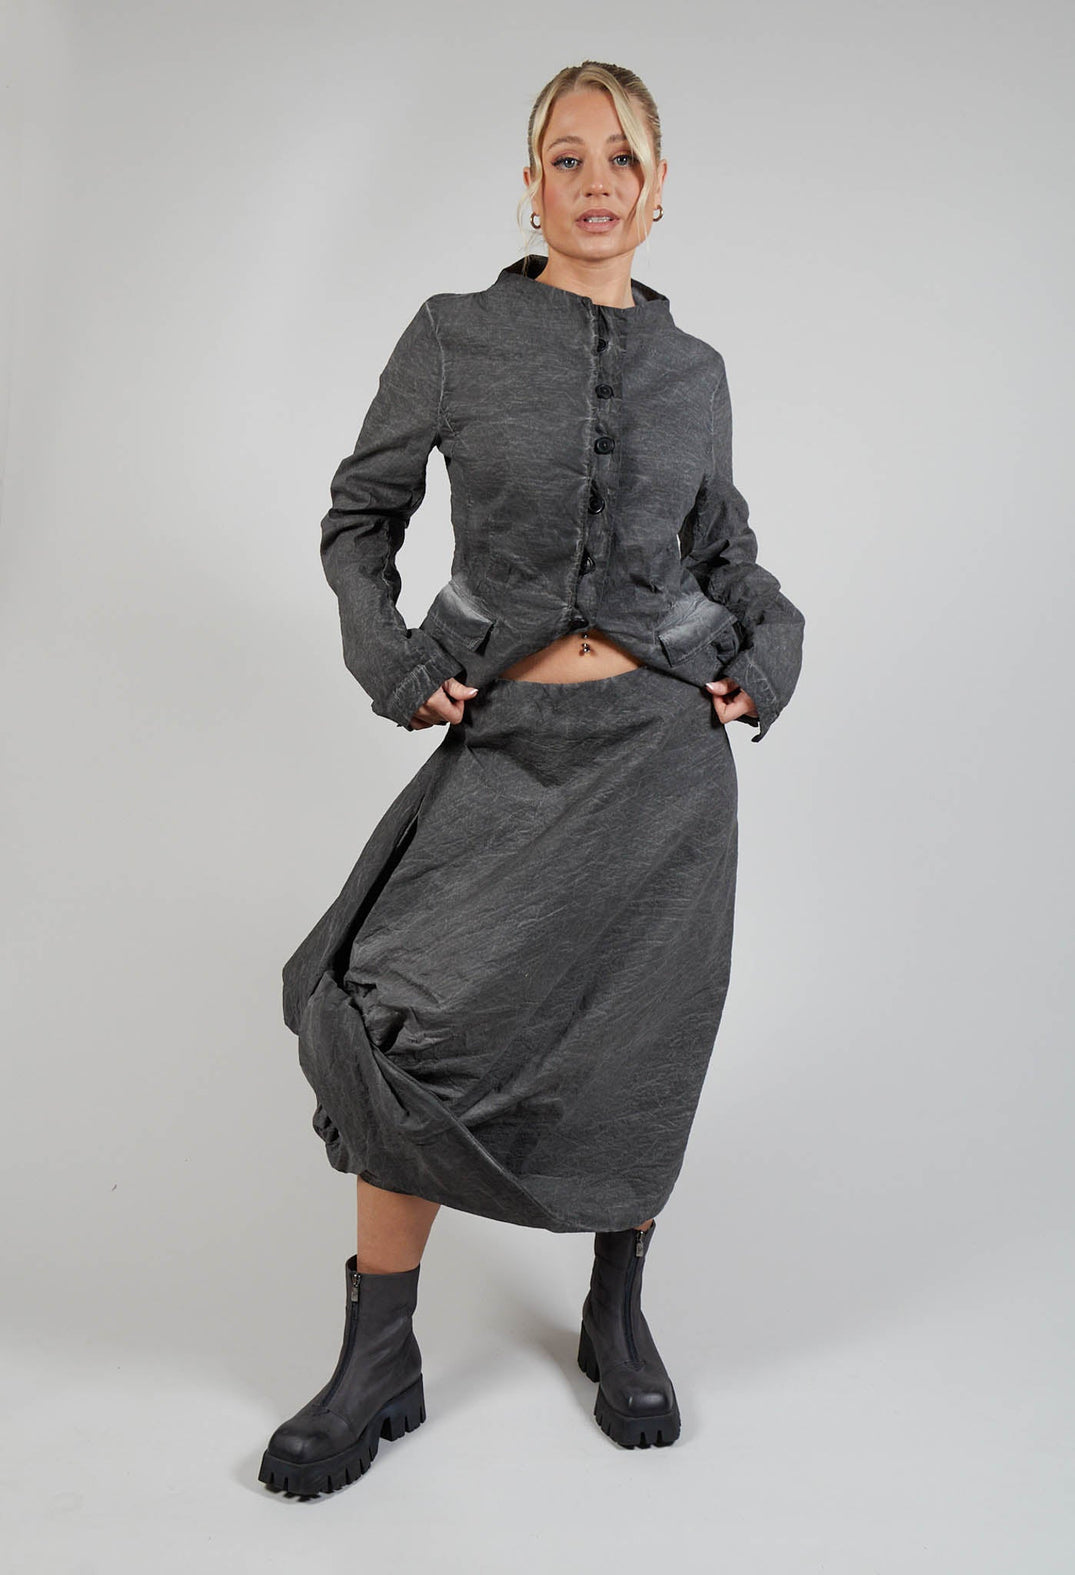 Tucked Fabric Skirt in Coal Cloud